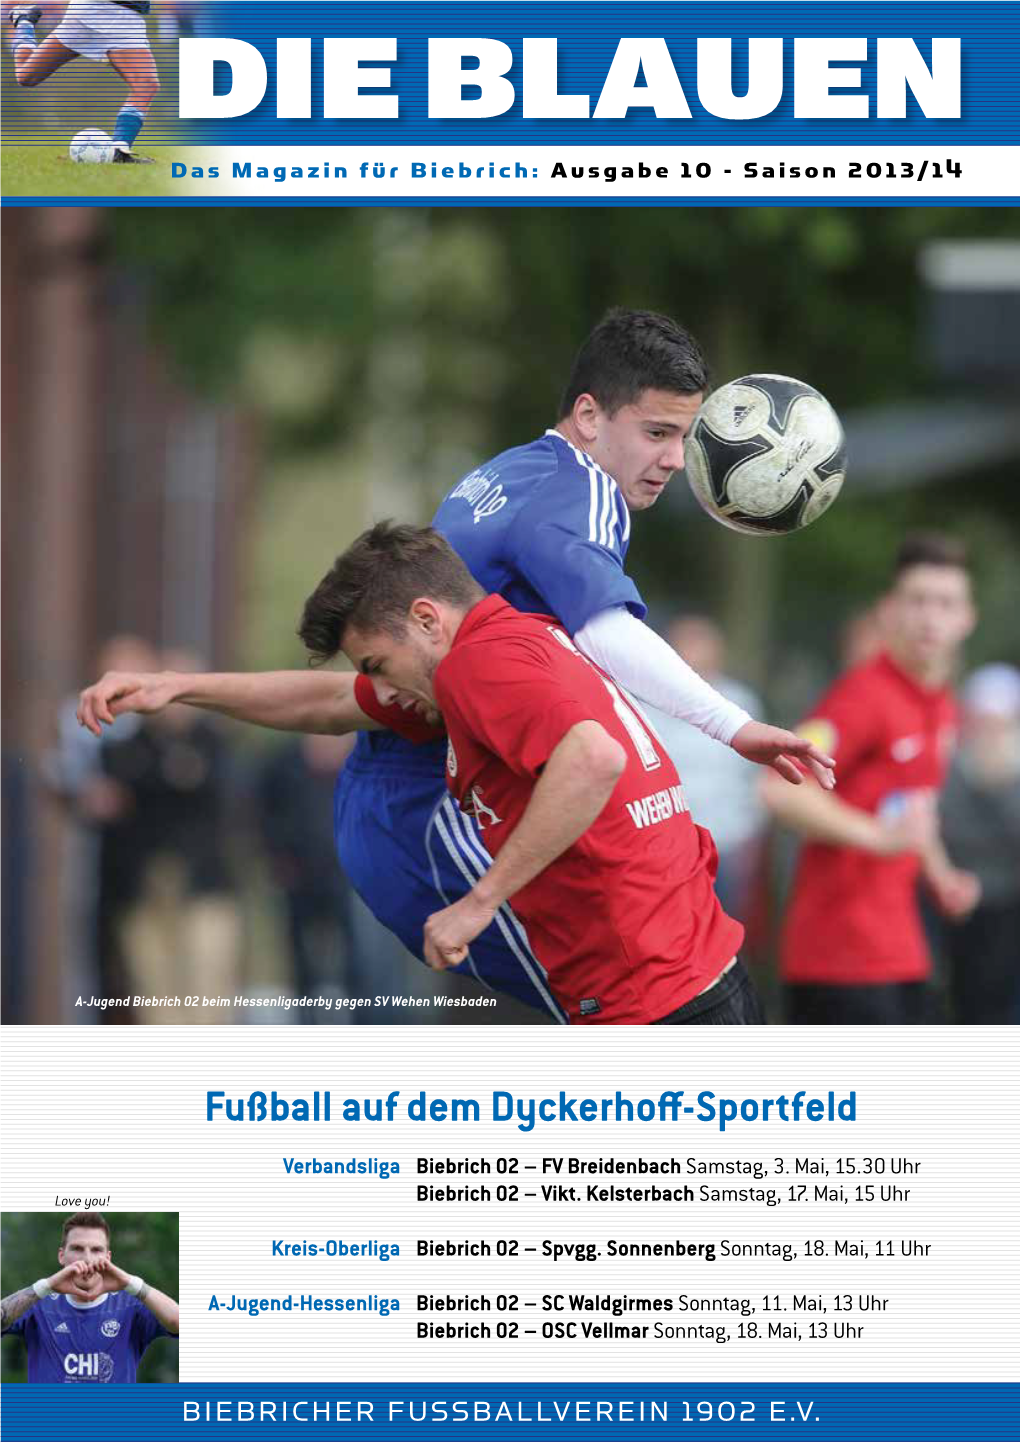 Fußball Auf Dem Dyckerhoff-Sportfeld Verbandsliga Biebrich 02 – FV Breidenbach Samstag, 3